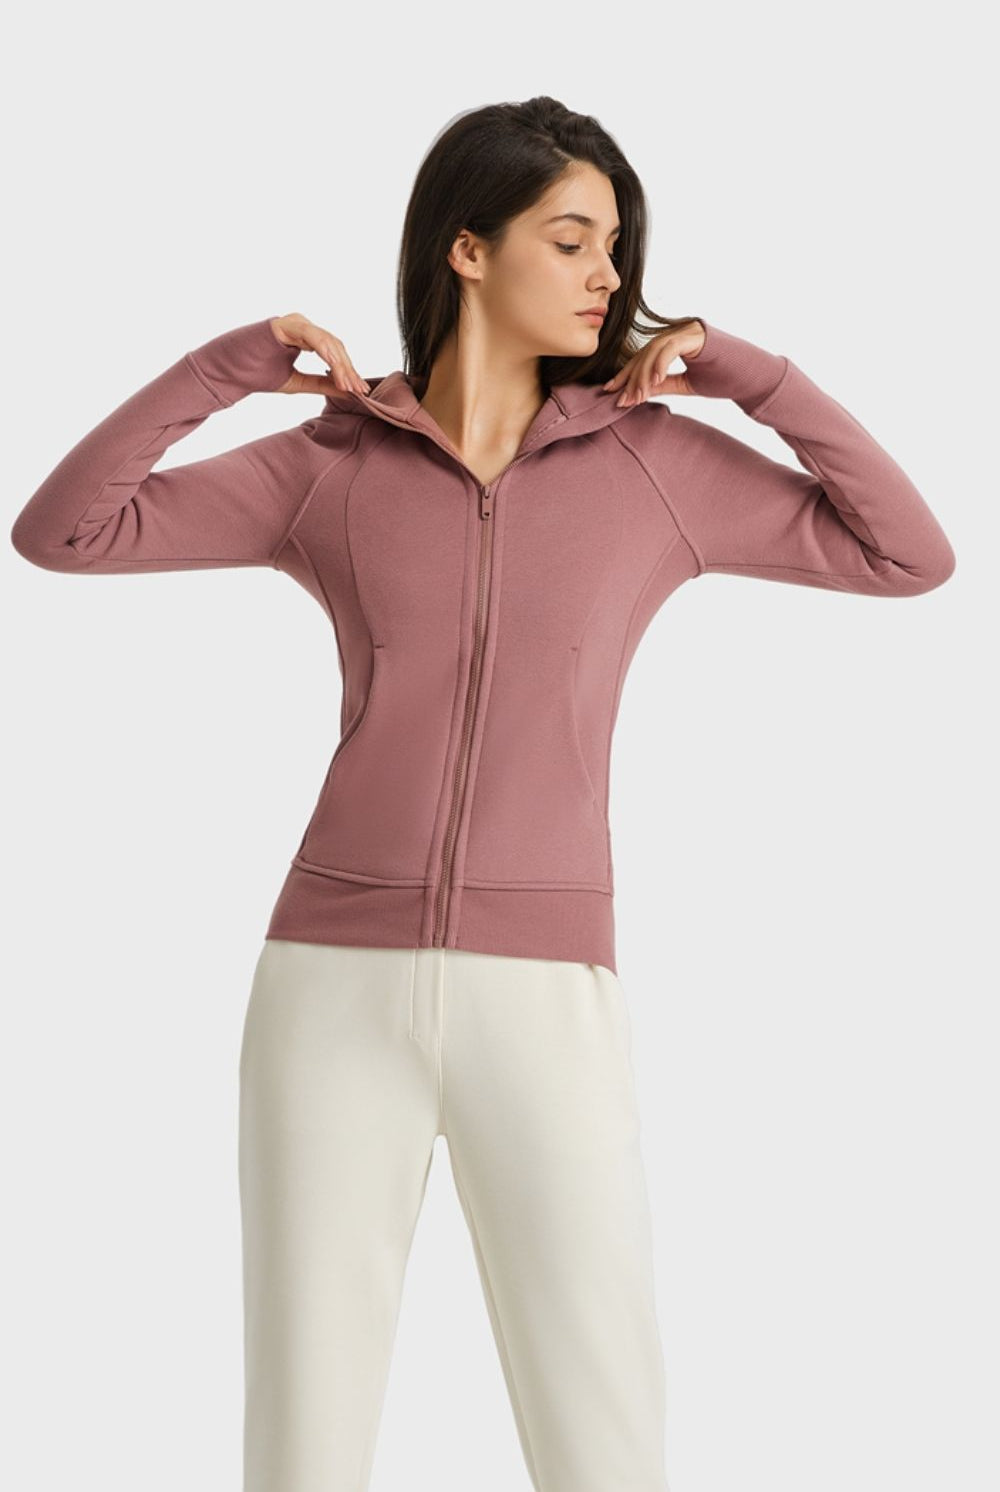 Light Gray Progress Not Perfection Zip Up Seam Detail Hooded Sports Jacket activewear